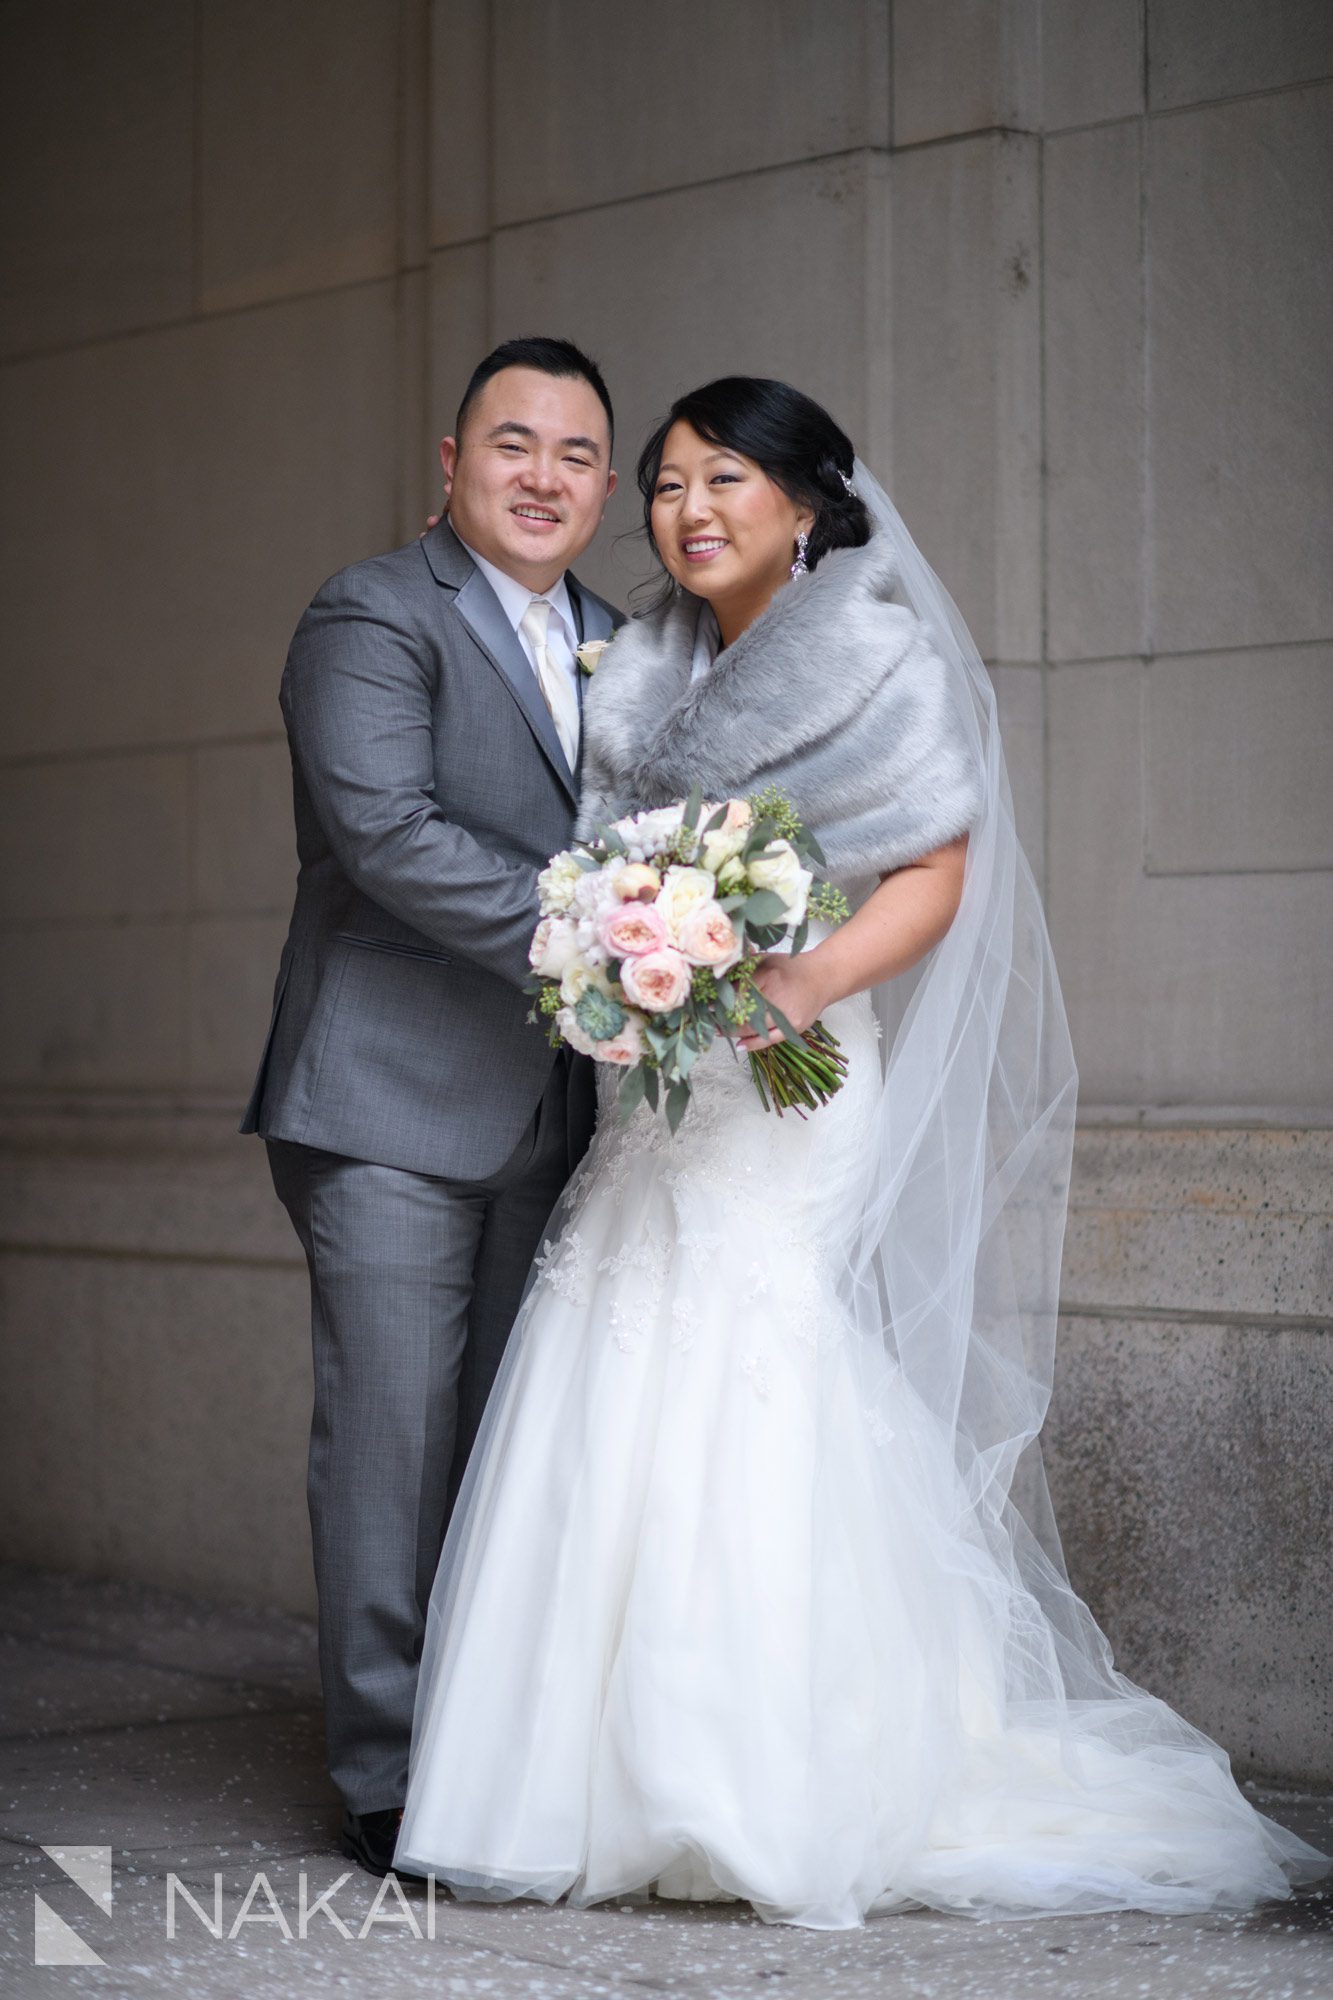 union station Chicago wedding photographer bride groom